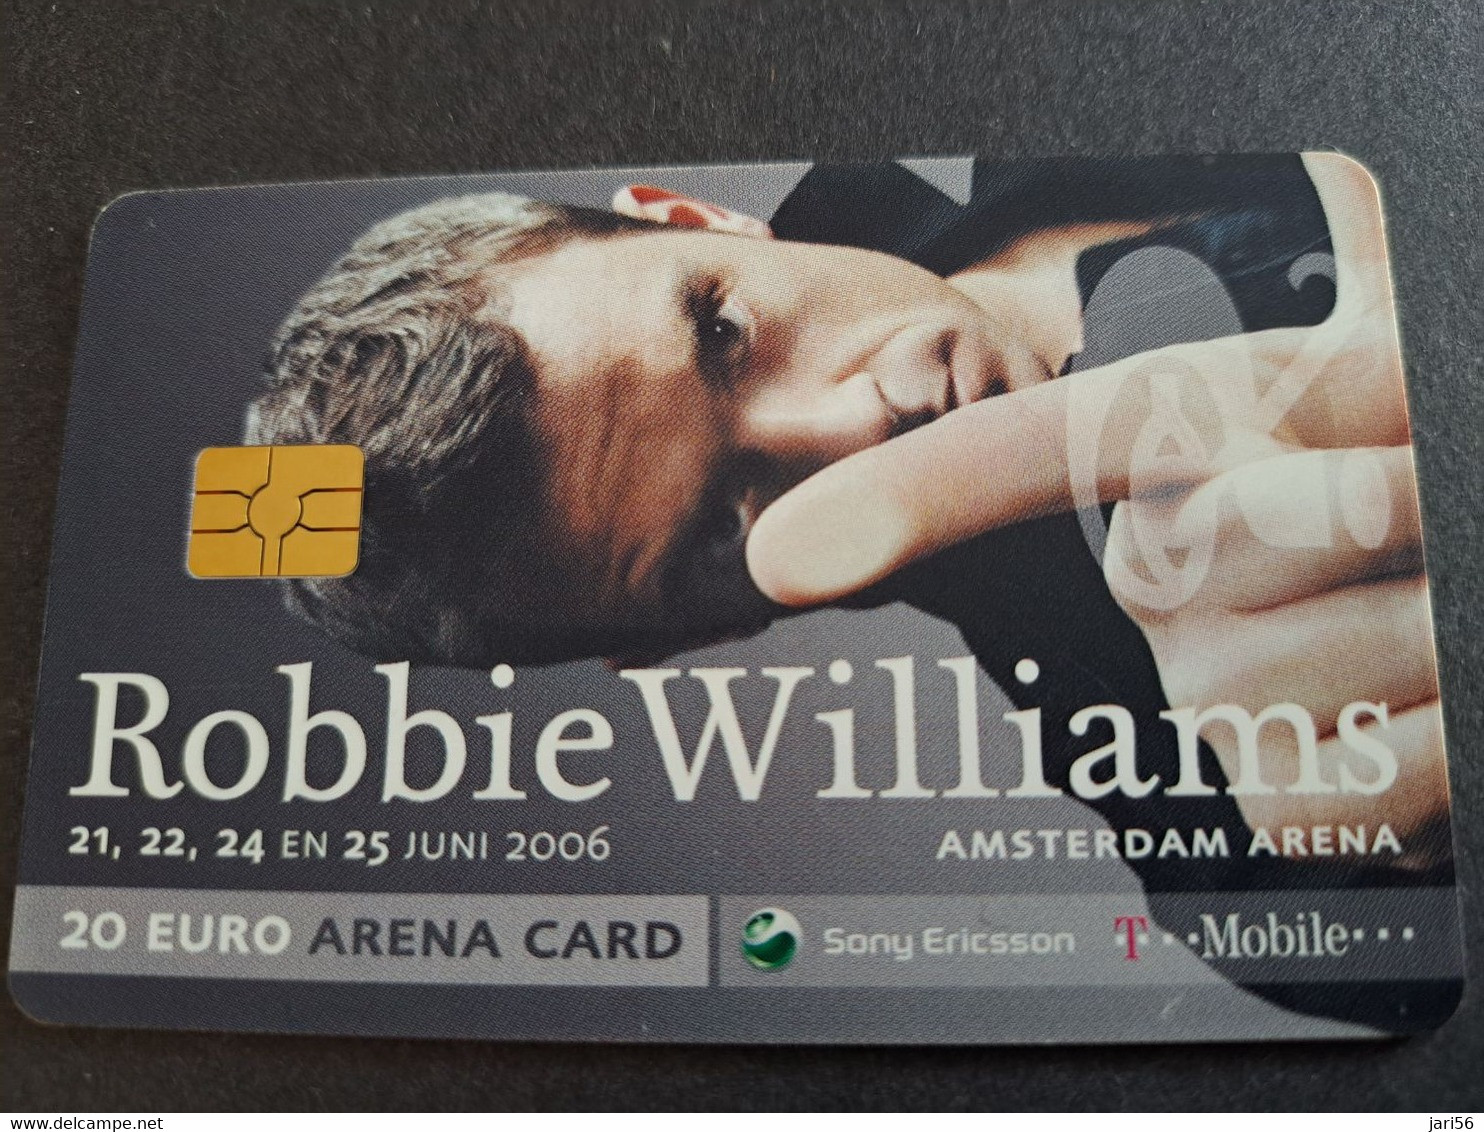 NETHERLANDS CHIPCARD € 20,-  ,- ARENA CARD / ROBBIE WILLIAMS   /MUSIC   - USED CARD  ** 10368** - Openbaar